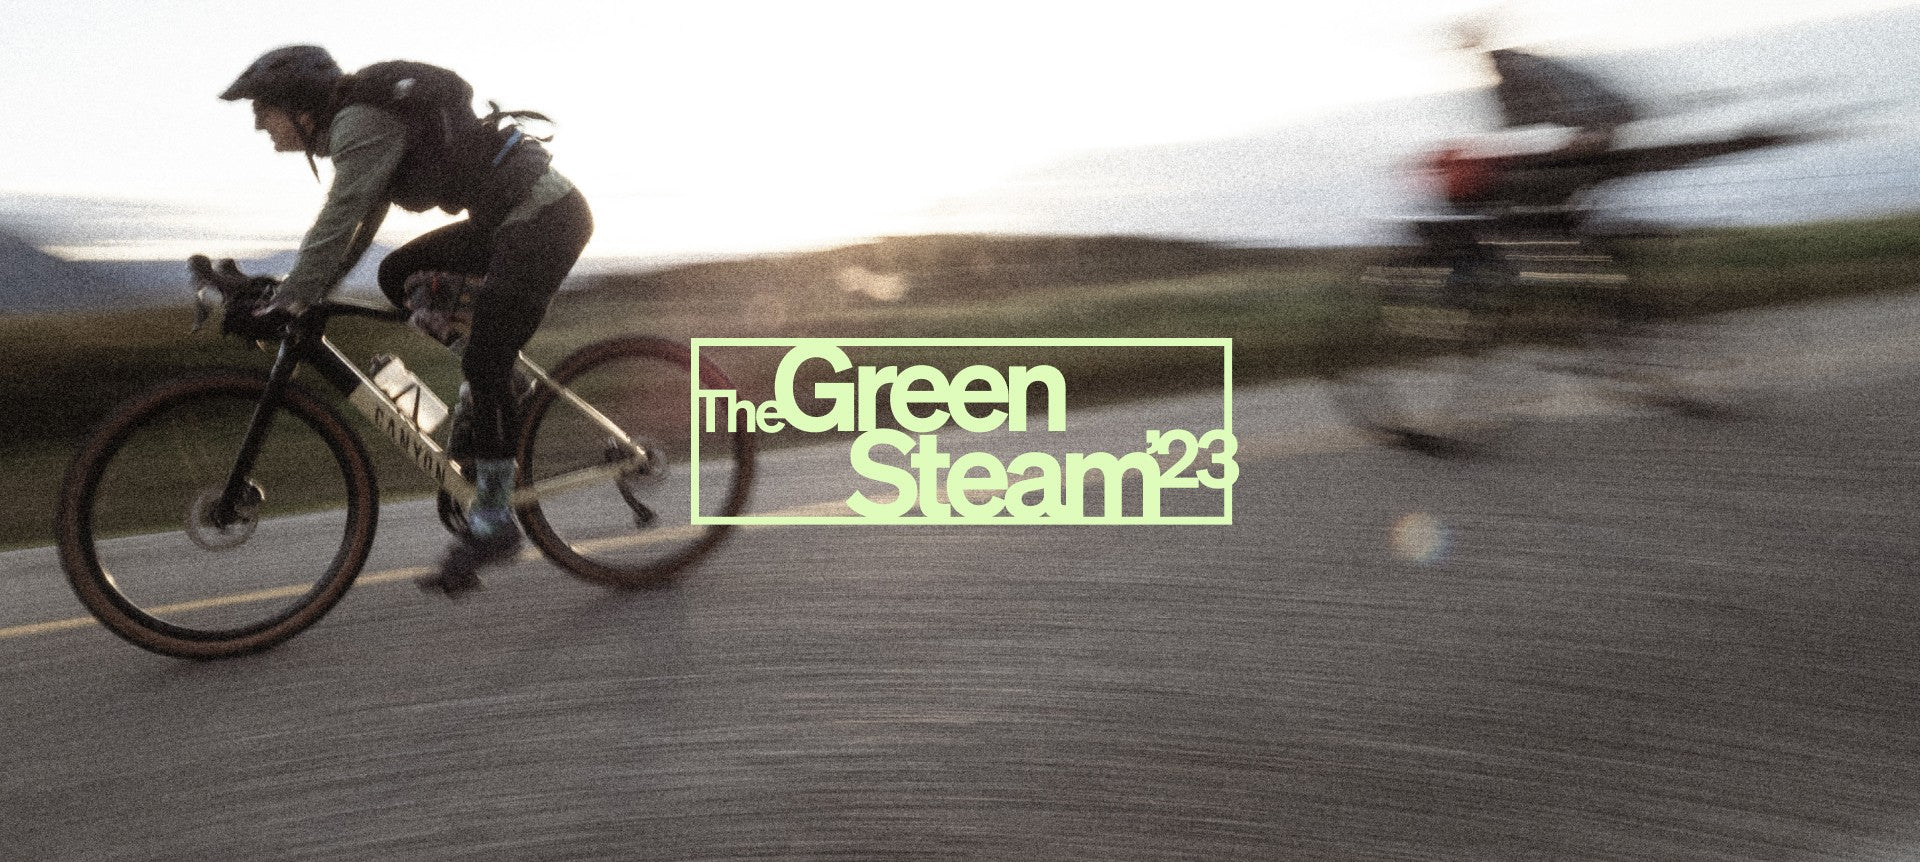 The Green Steam '23